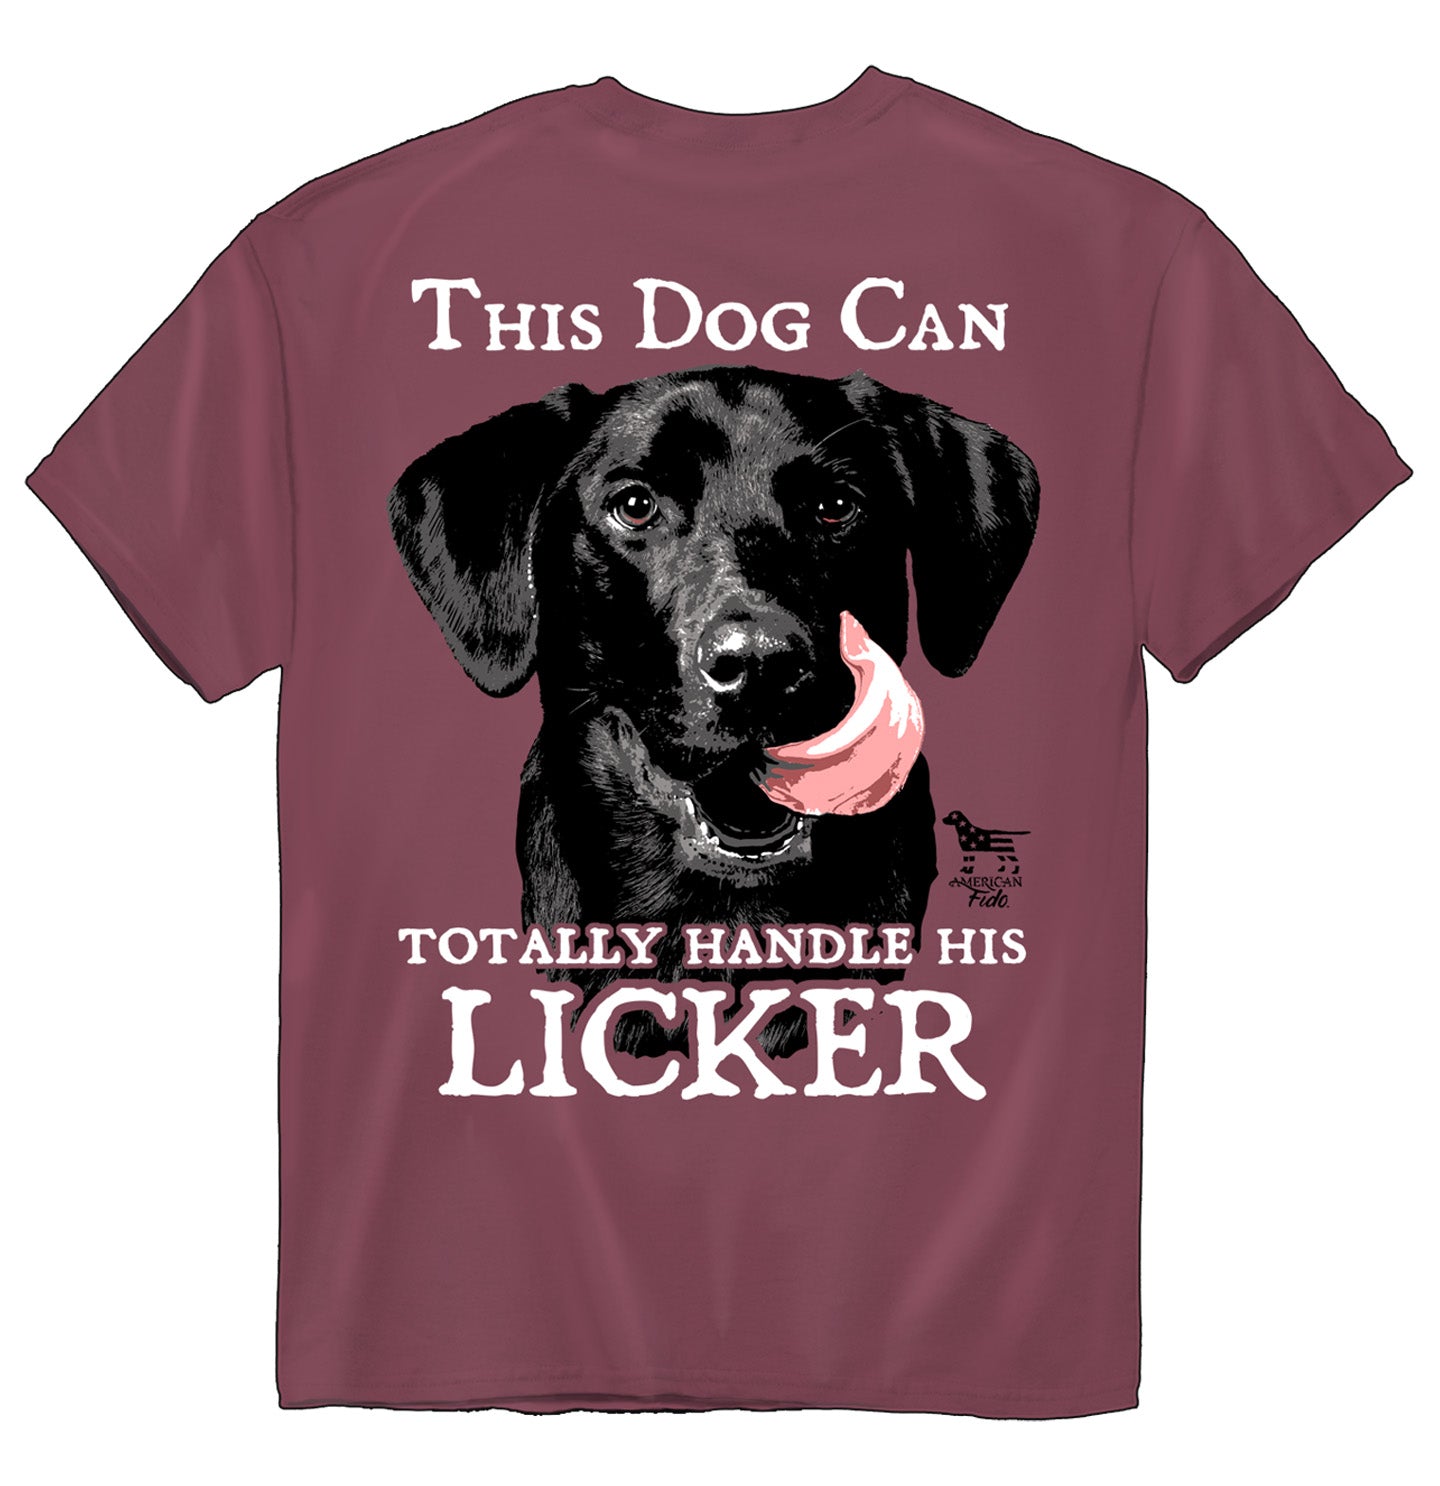 Handle His Licker - Adult Unisex T-Shirt